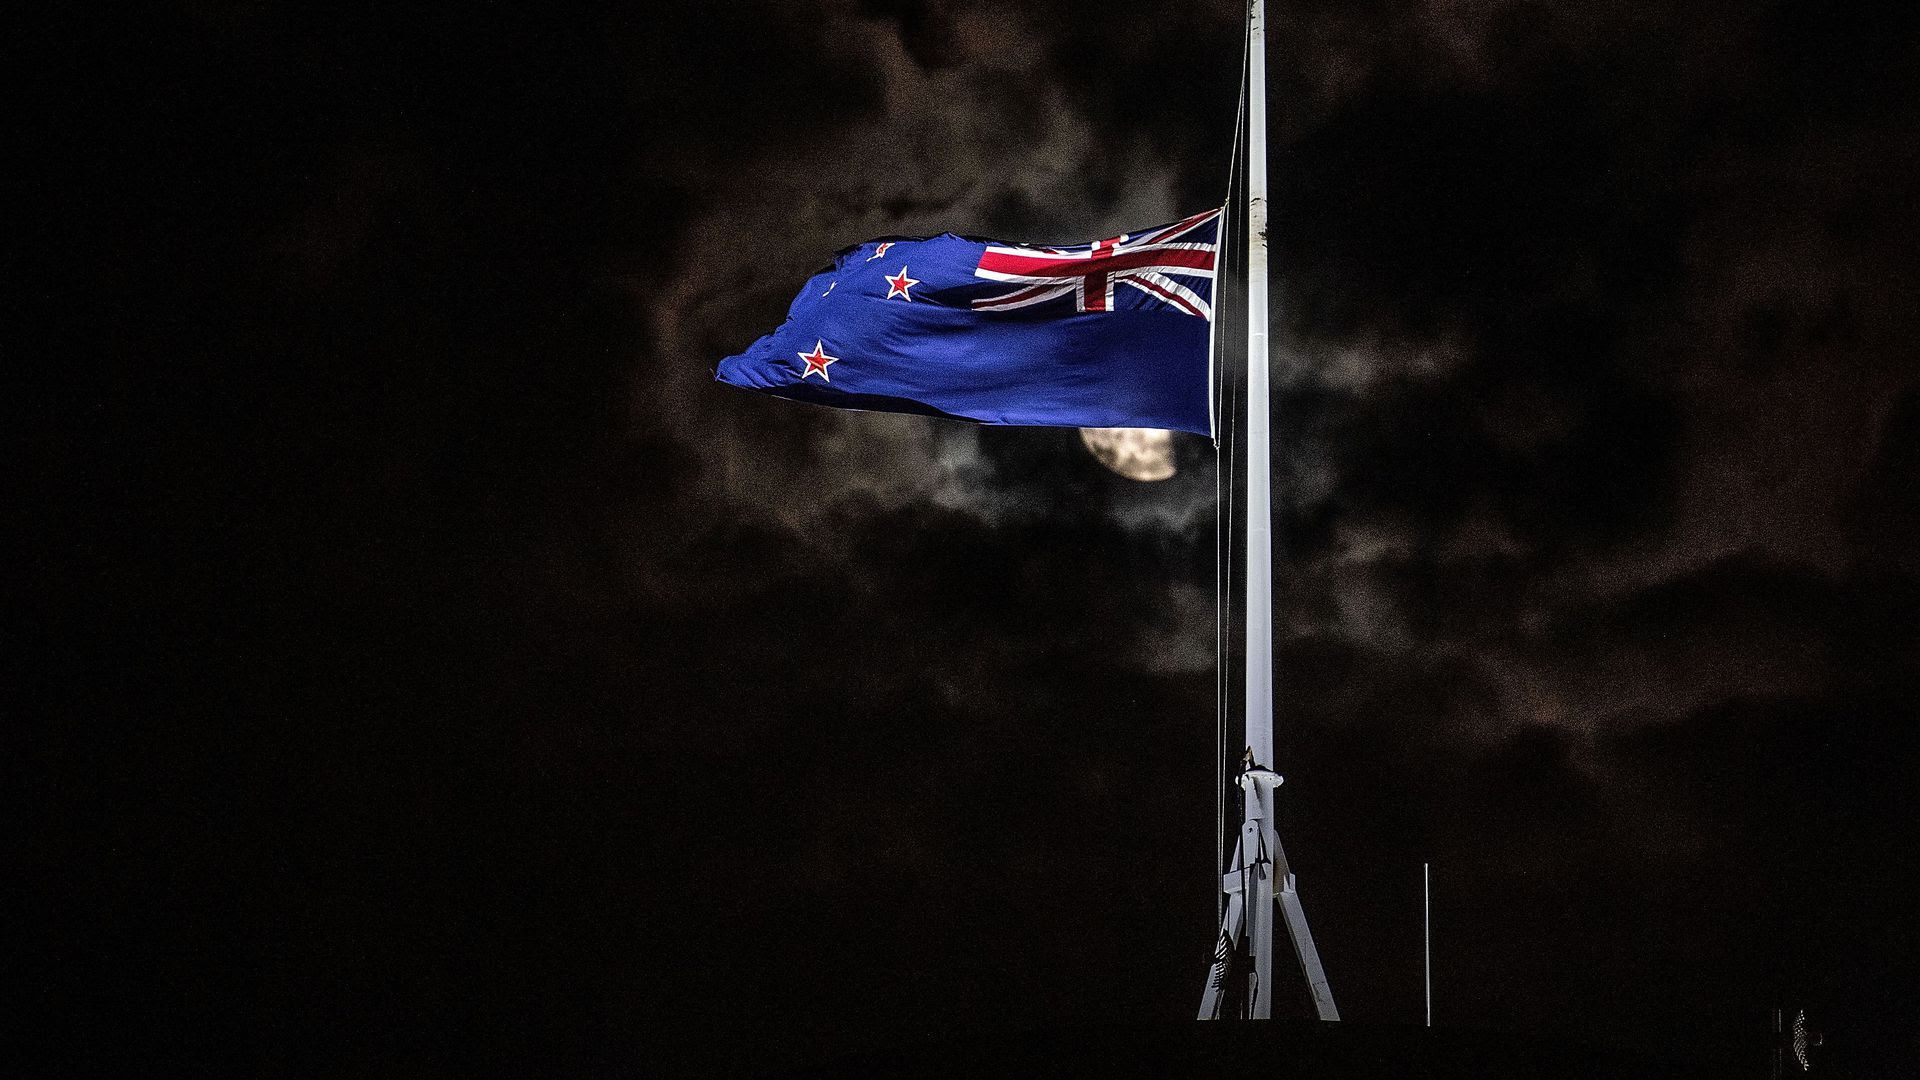 New Zealand flag.